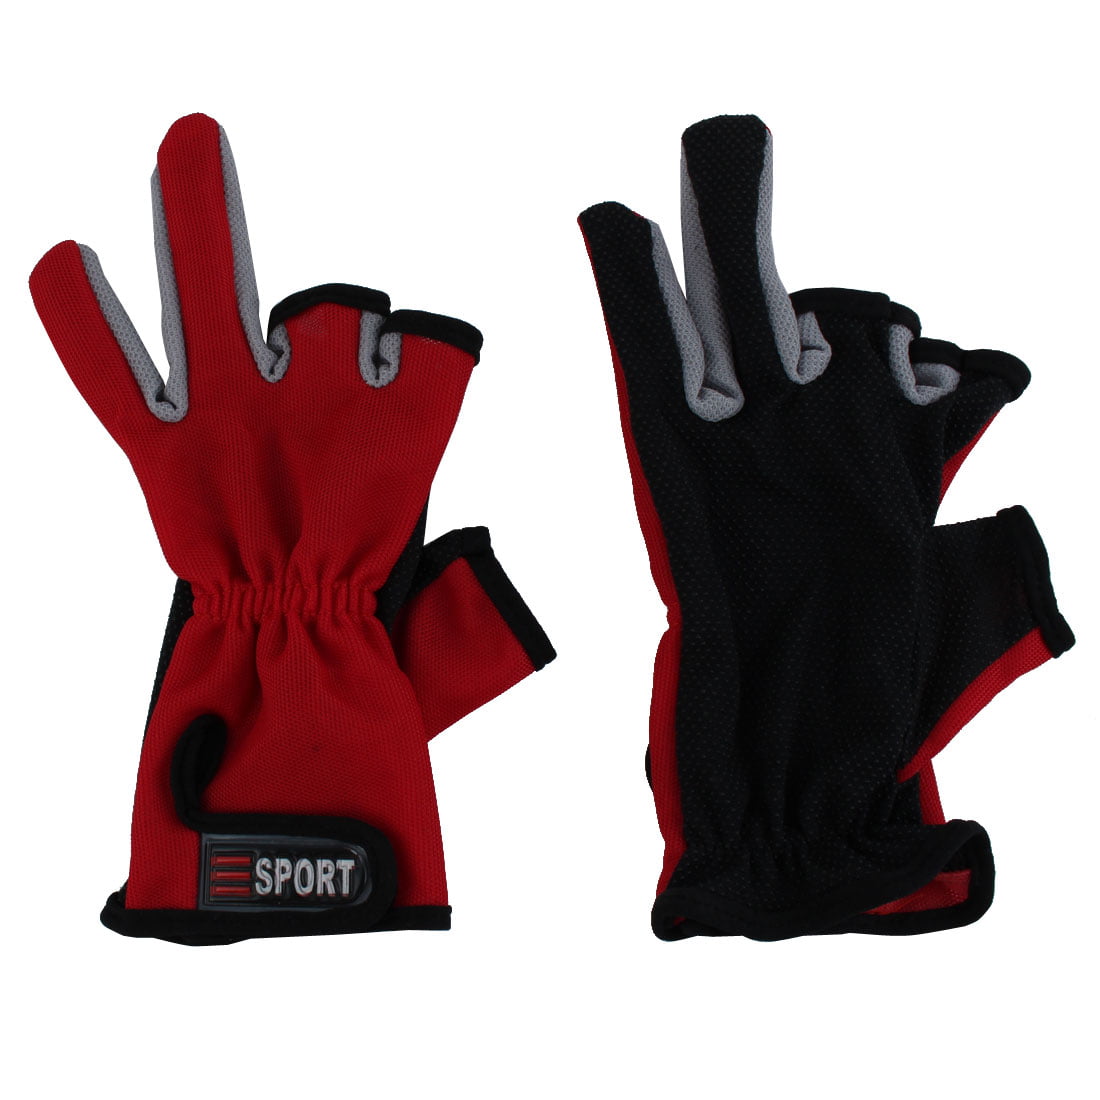 Fishing Hunting Gloves 3 Fingerless Anti-slip Waterproof Outdoor Sun Protection 